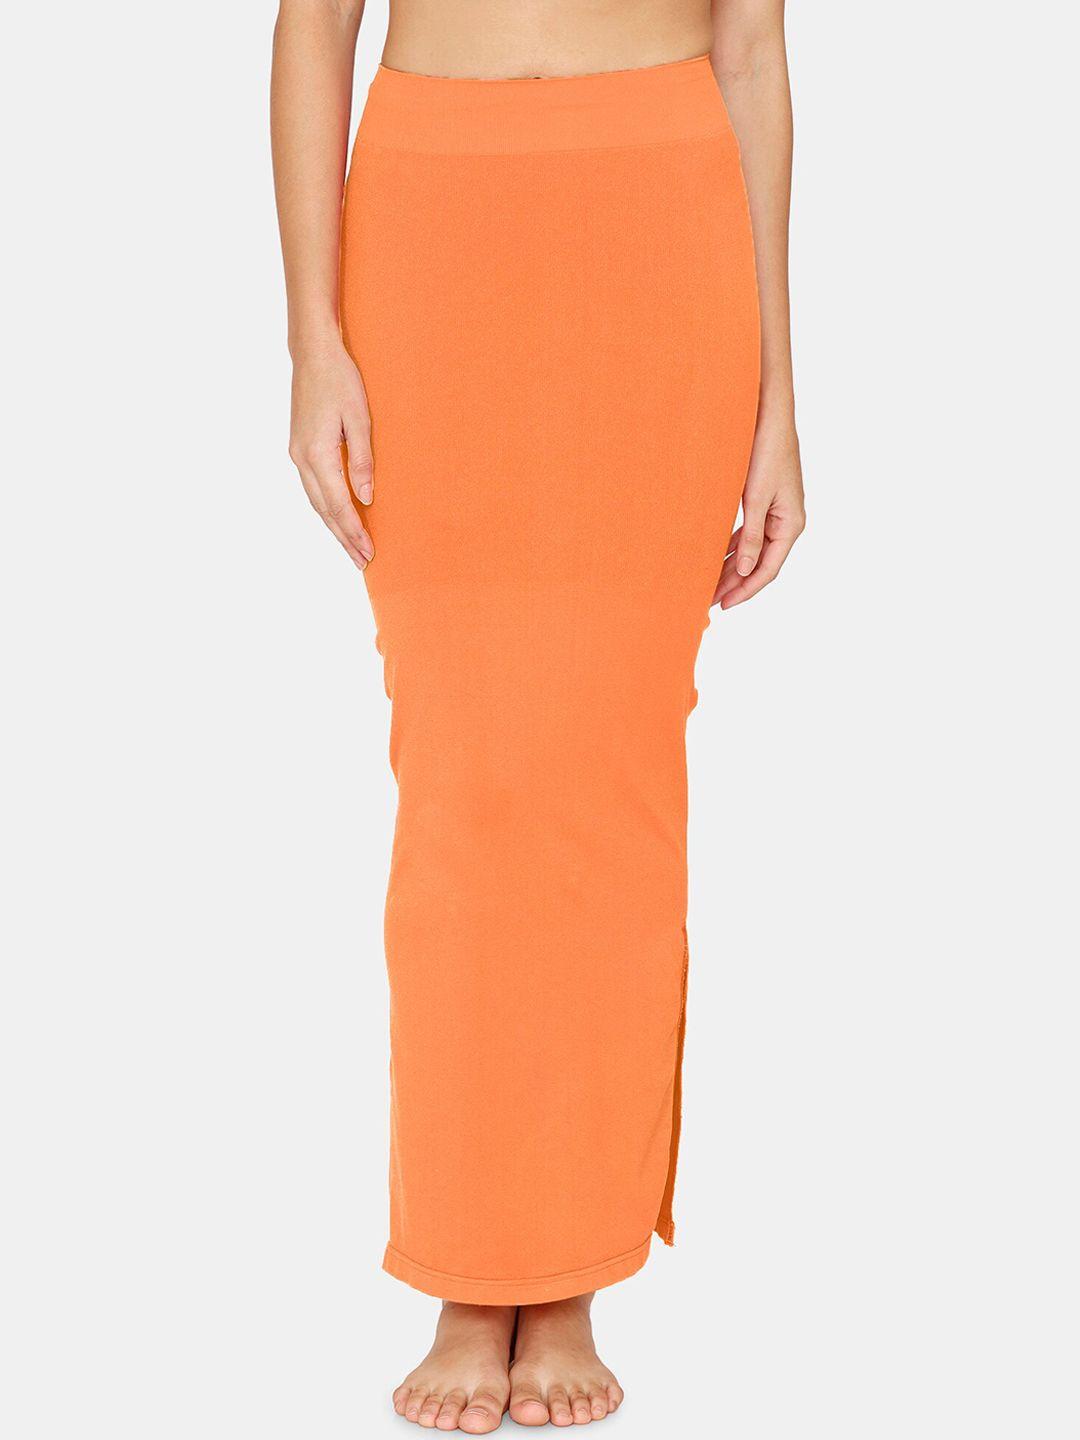 zivame women orange-colored solid saree shapewear